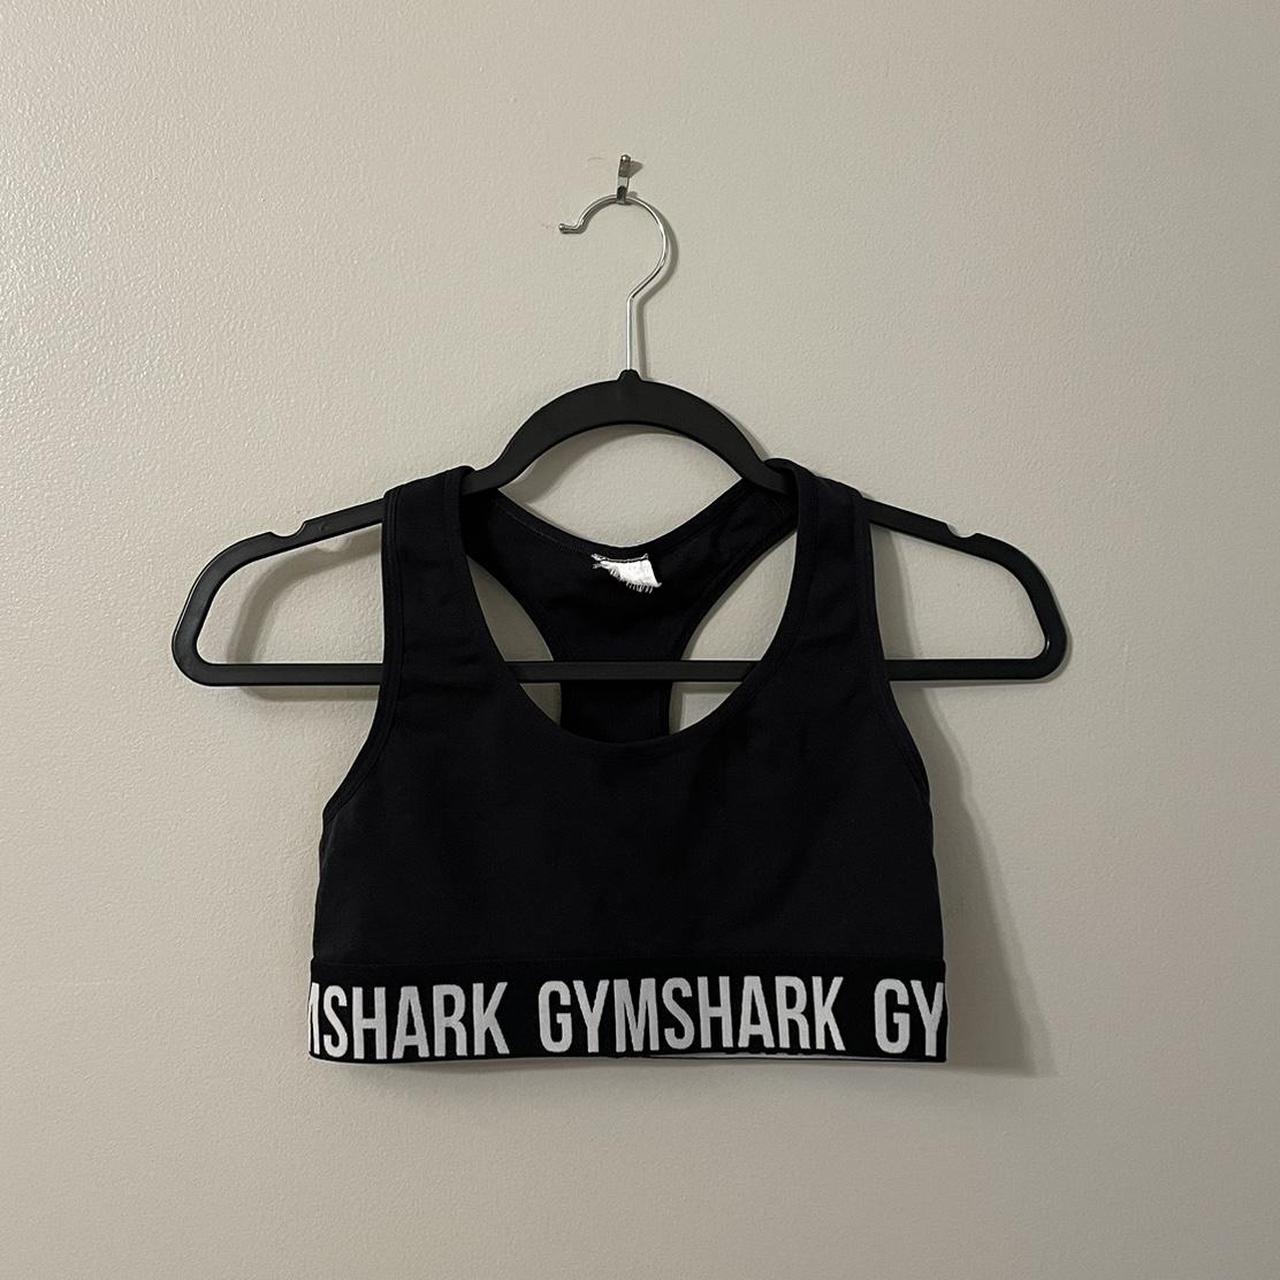 a classic gymshark HIGH IMPACT sports bra in black - Depop